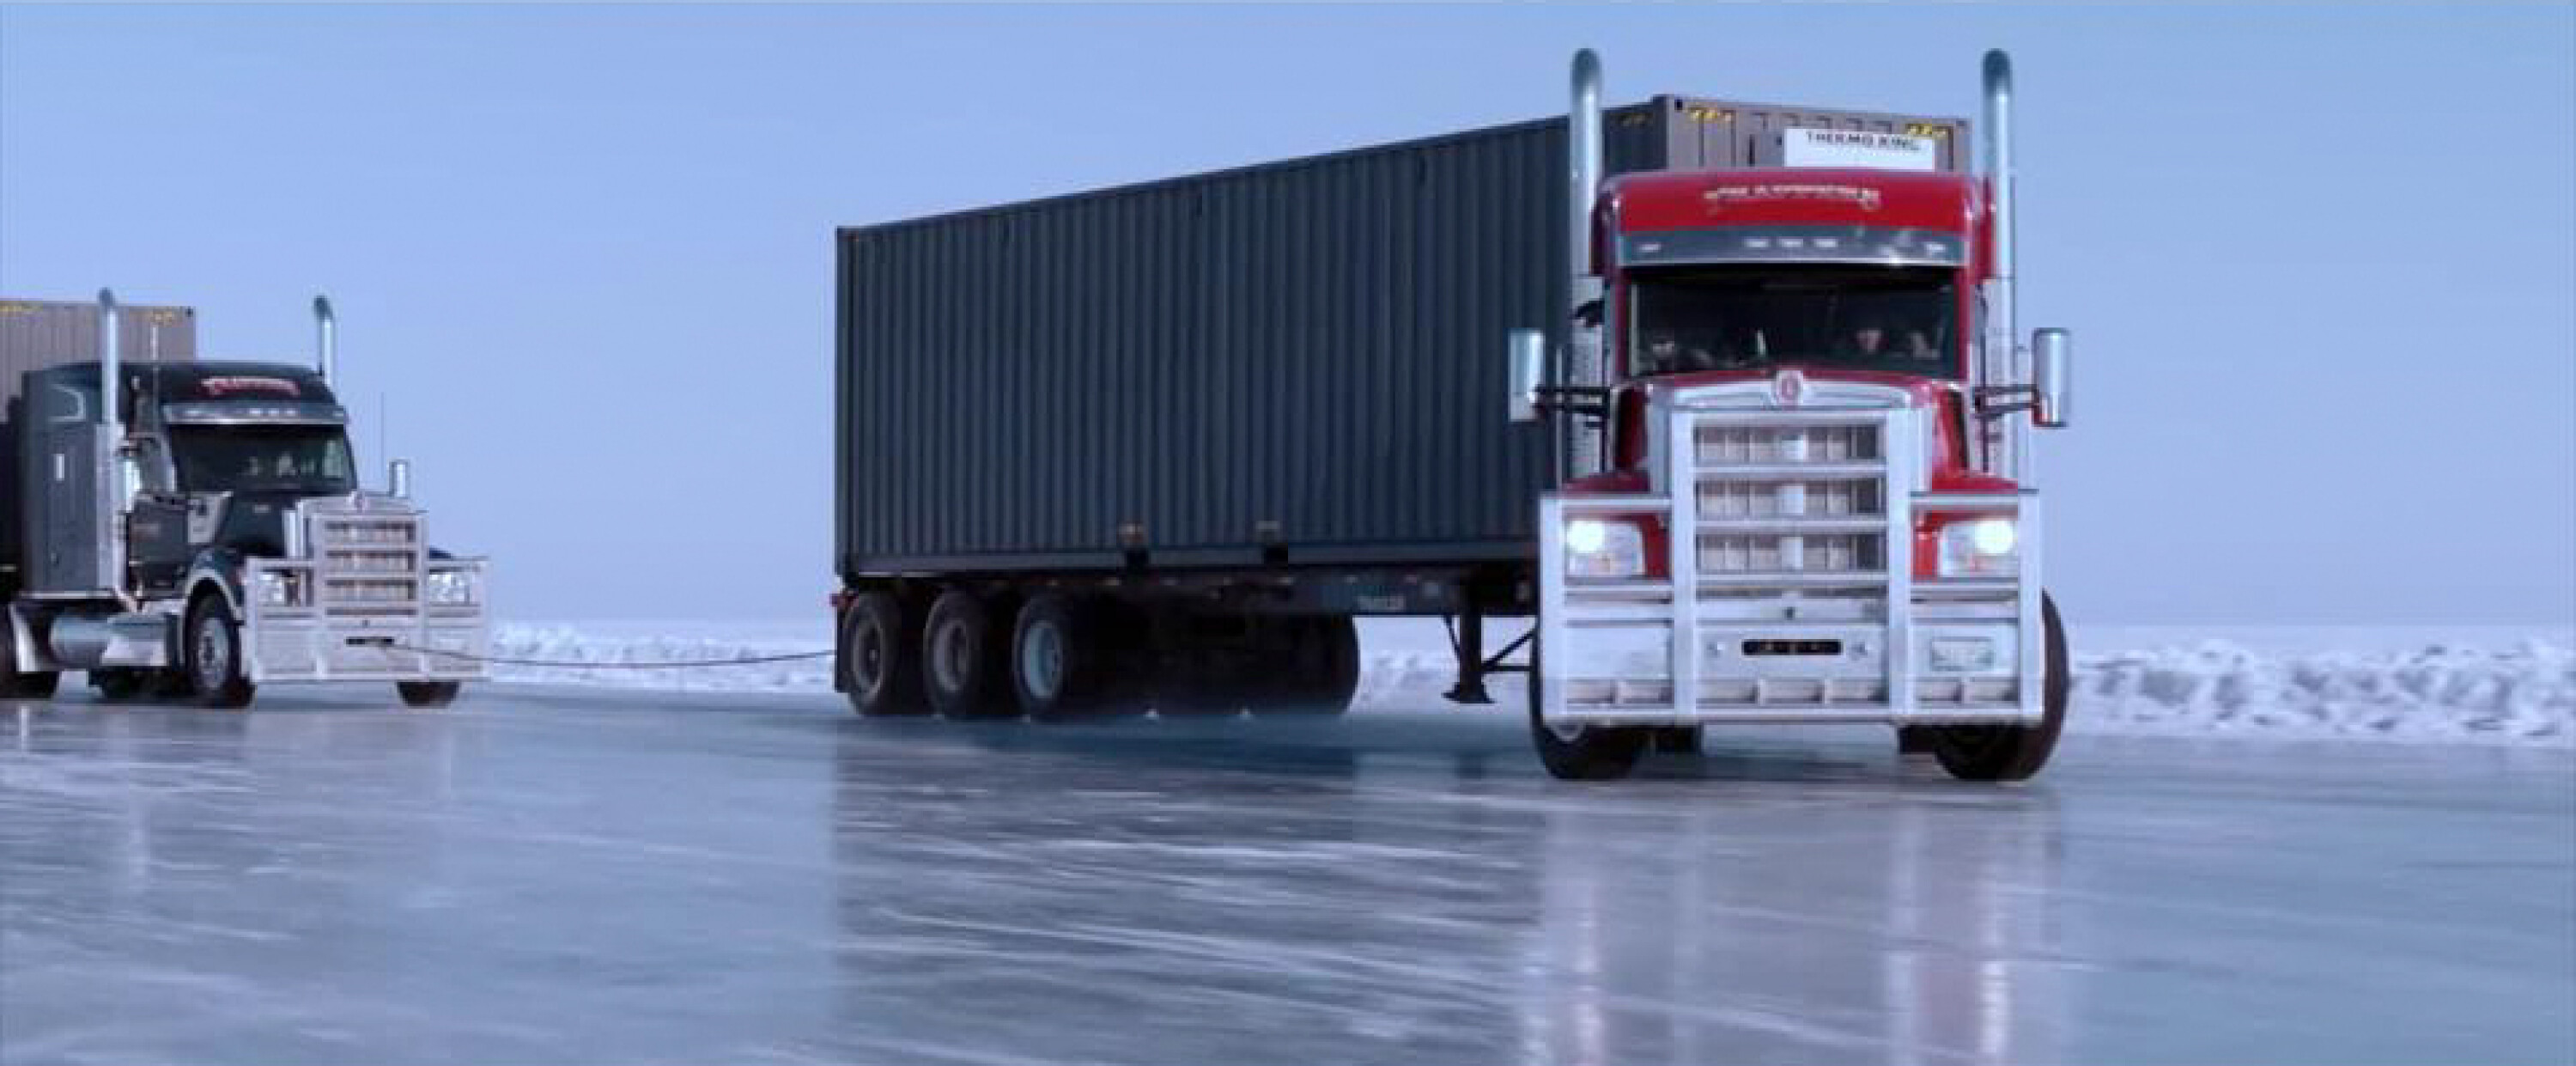 092611e1/the ice road movie truck 8 jpg